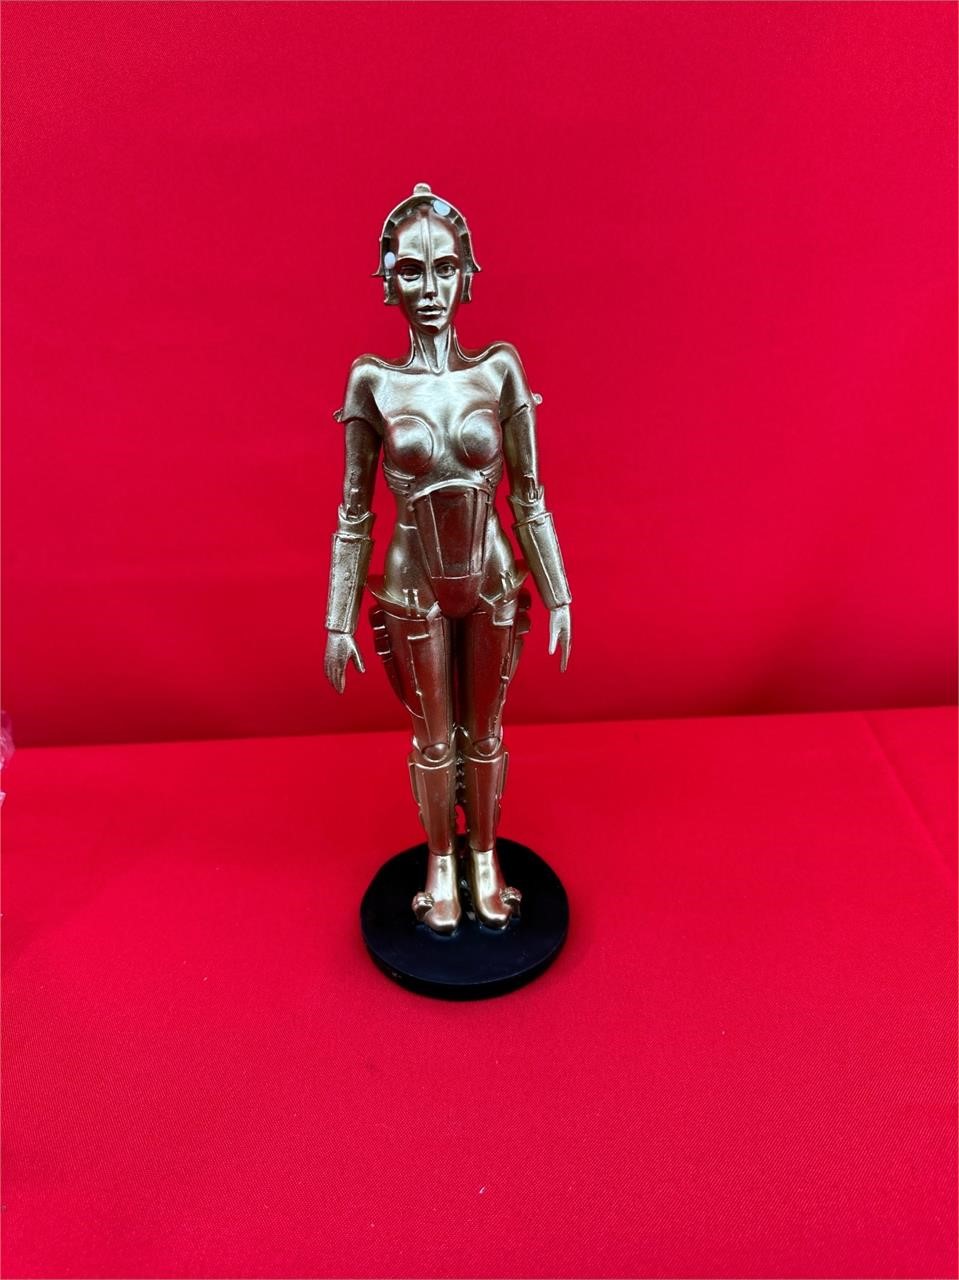 Metropolis Maria Robot Figurine